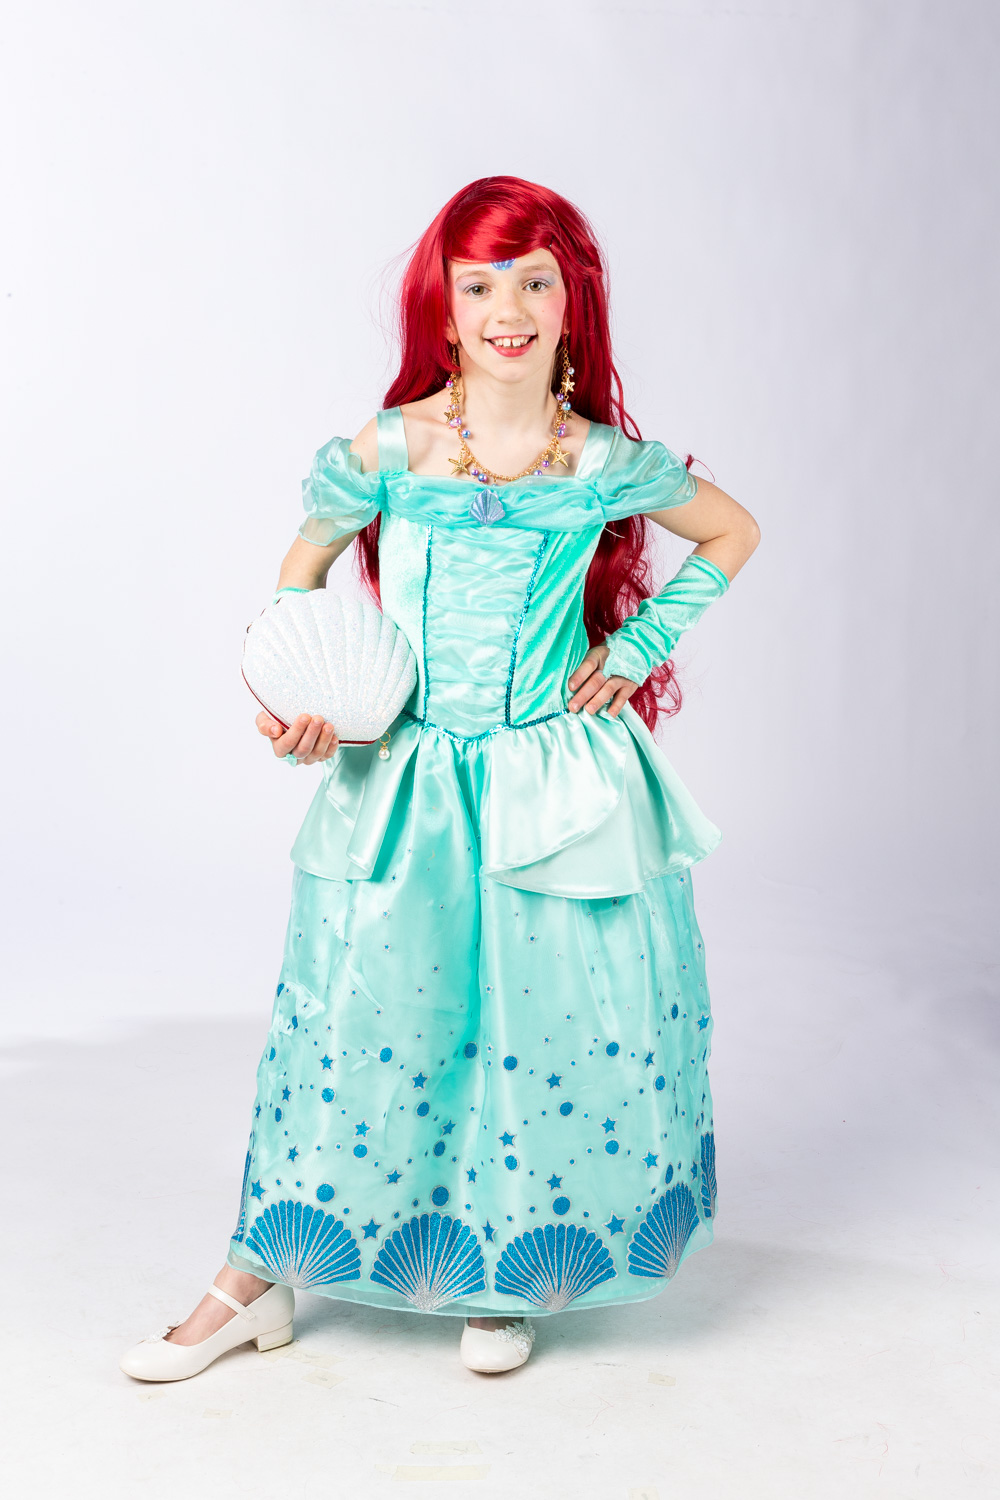 Mermaid princess costume